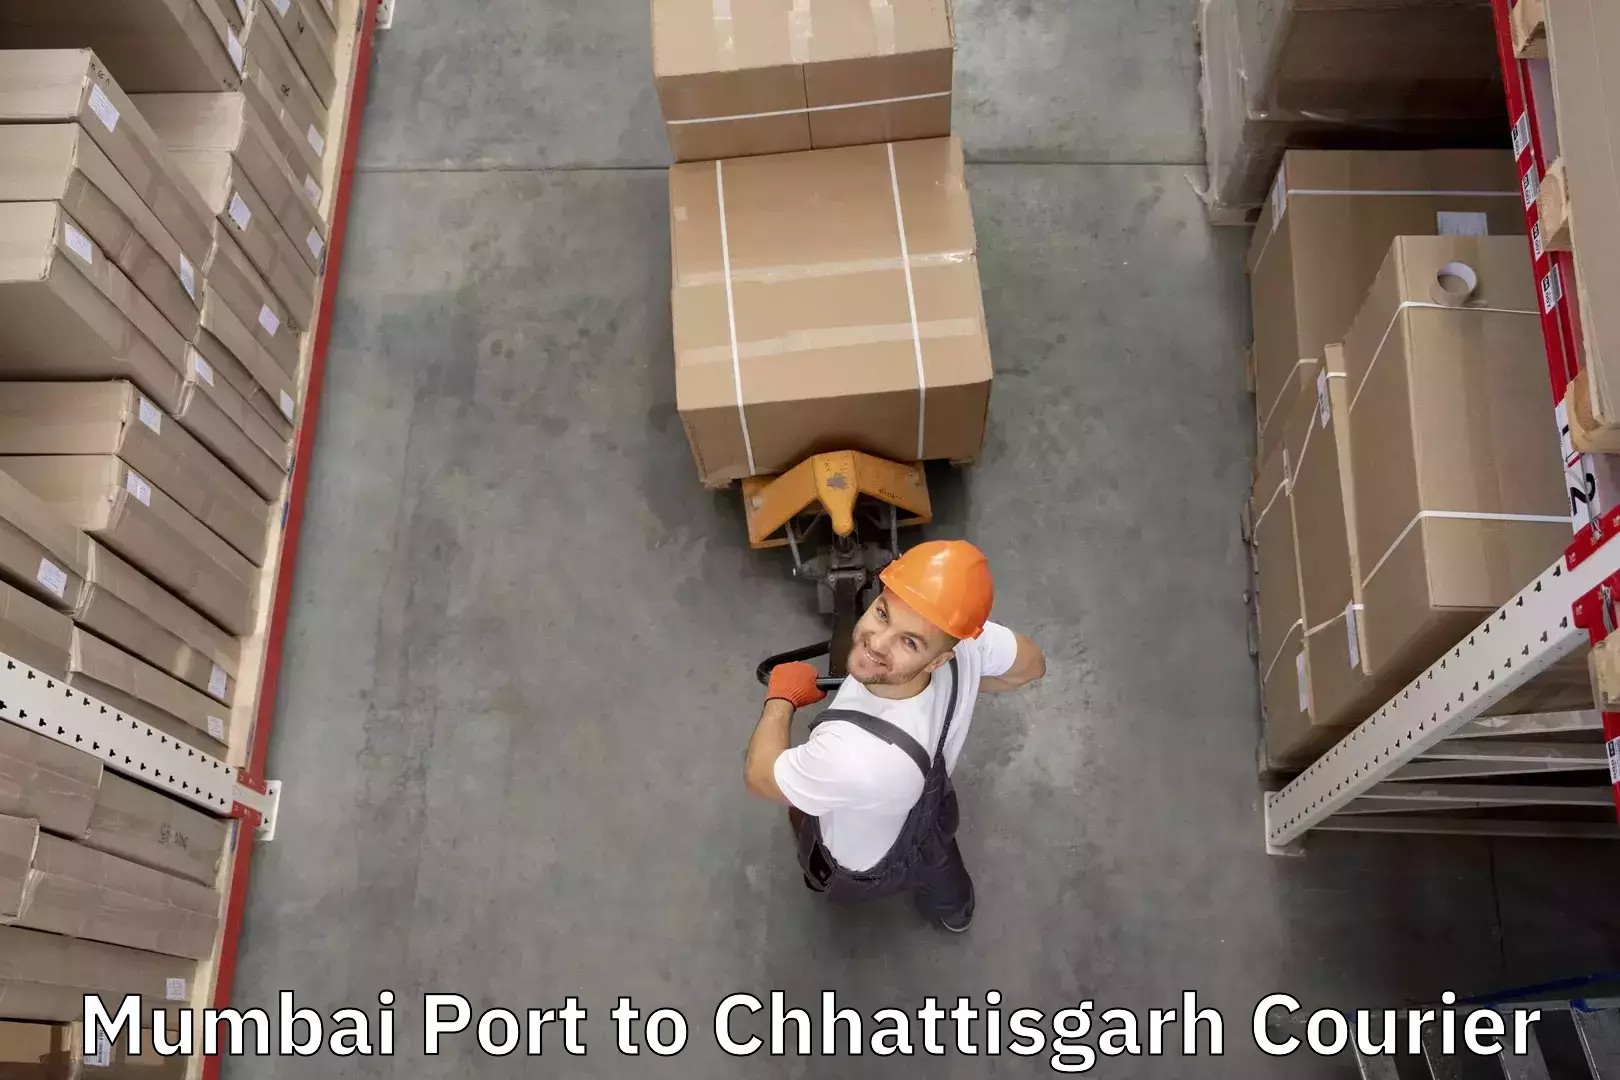 Luggage shipment specialists Mumbai Port to Chhattisgarh